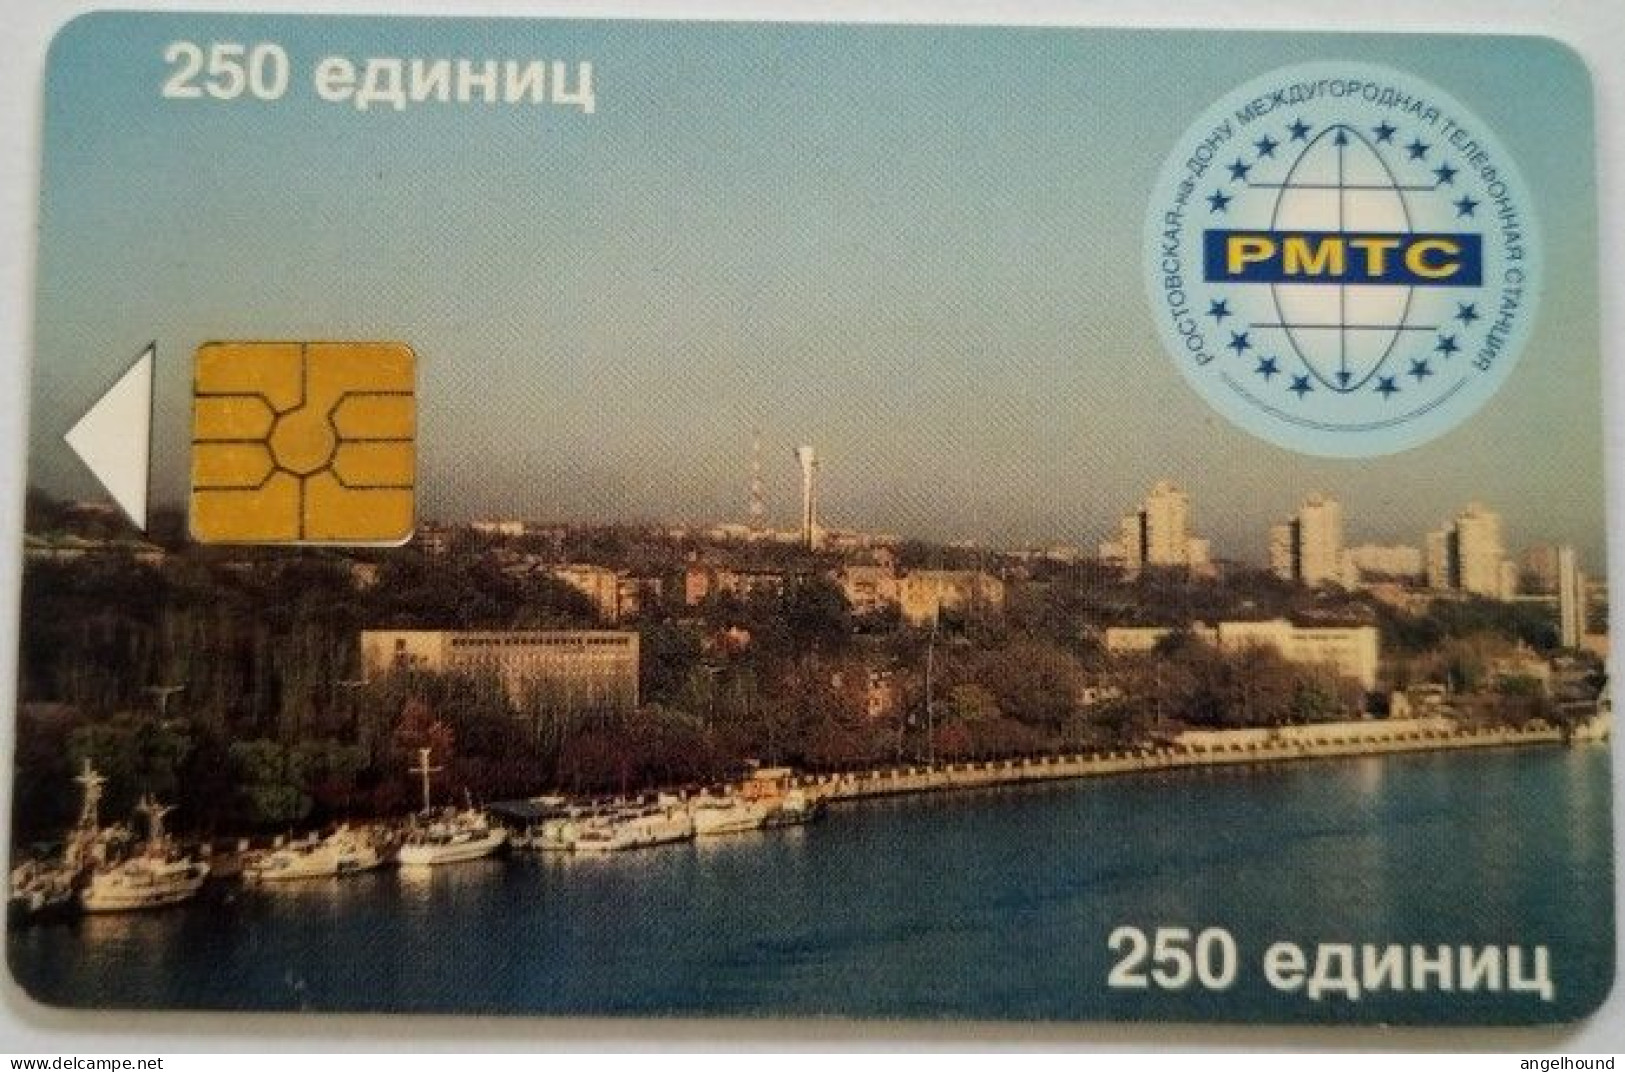 Russia 250 Rub.  Chip Card - PMTC Card - Don - Rusland